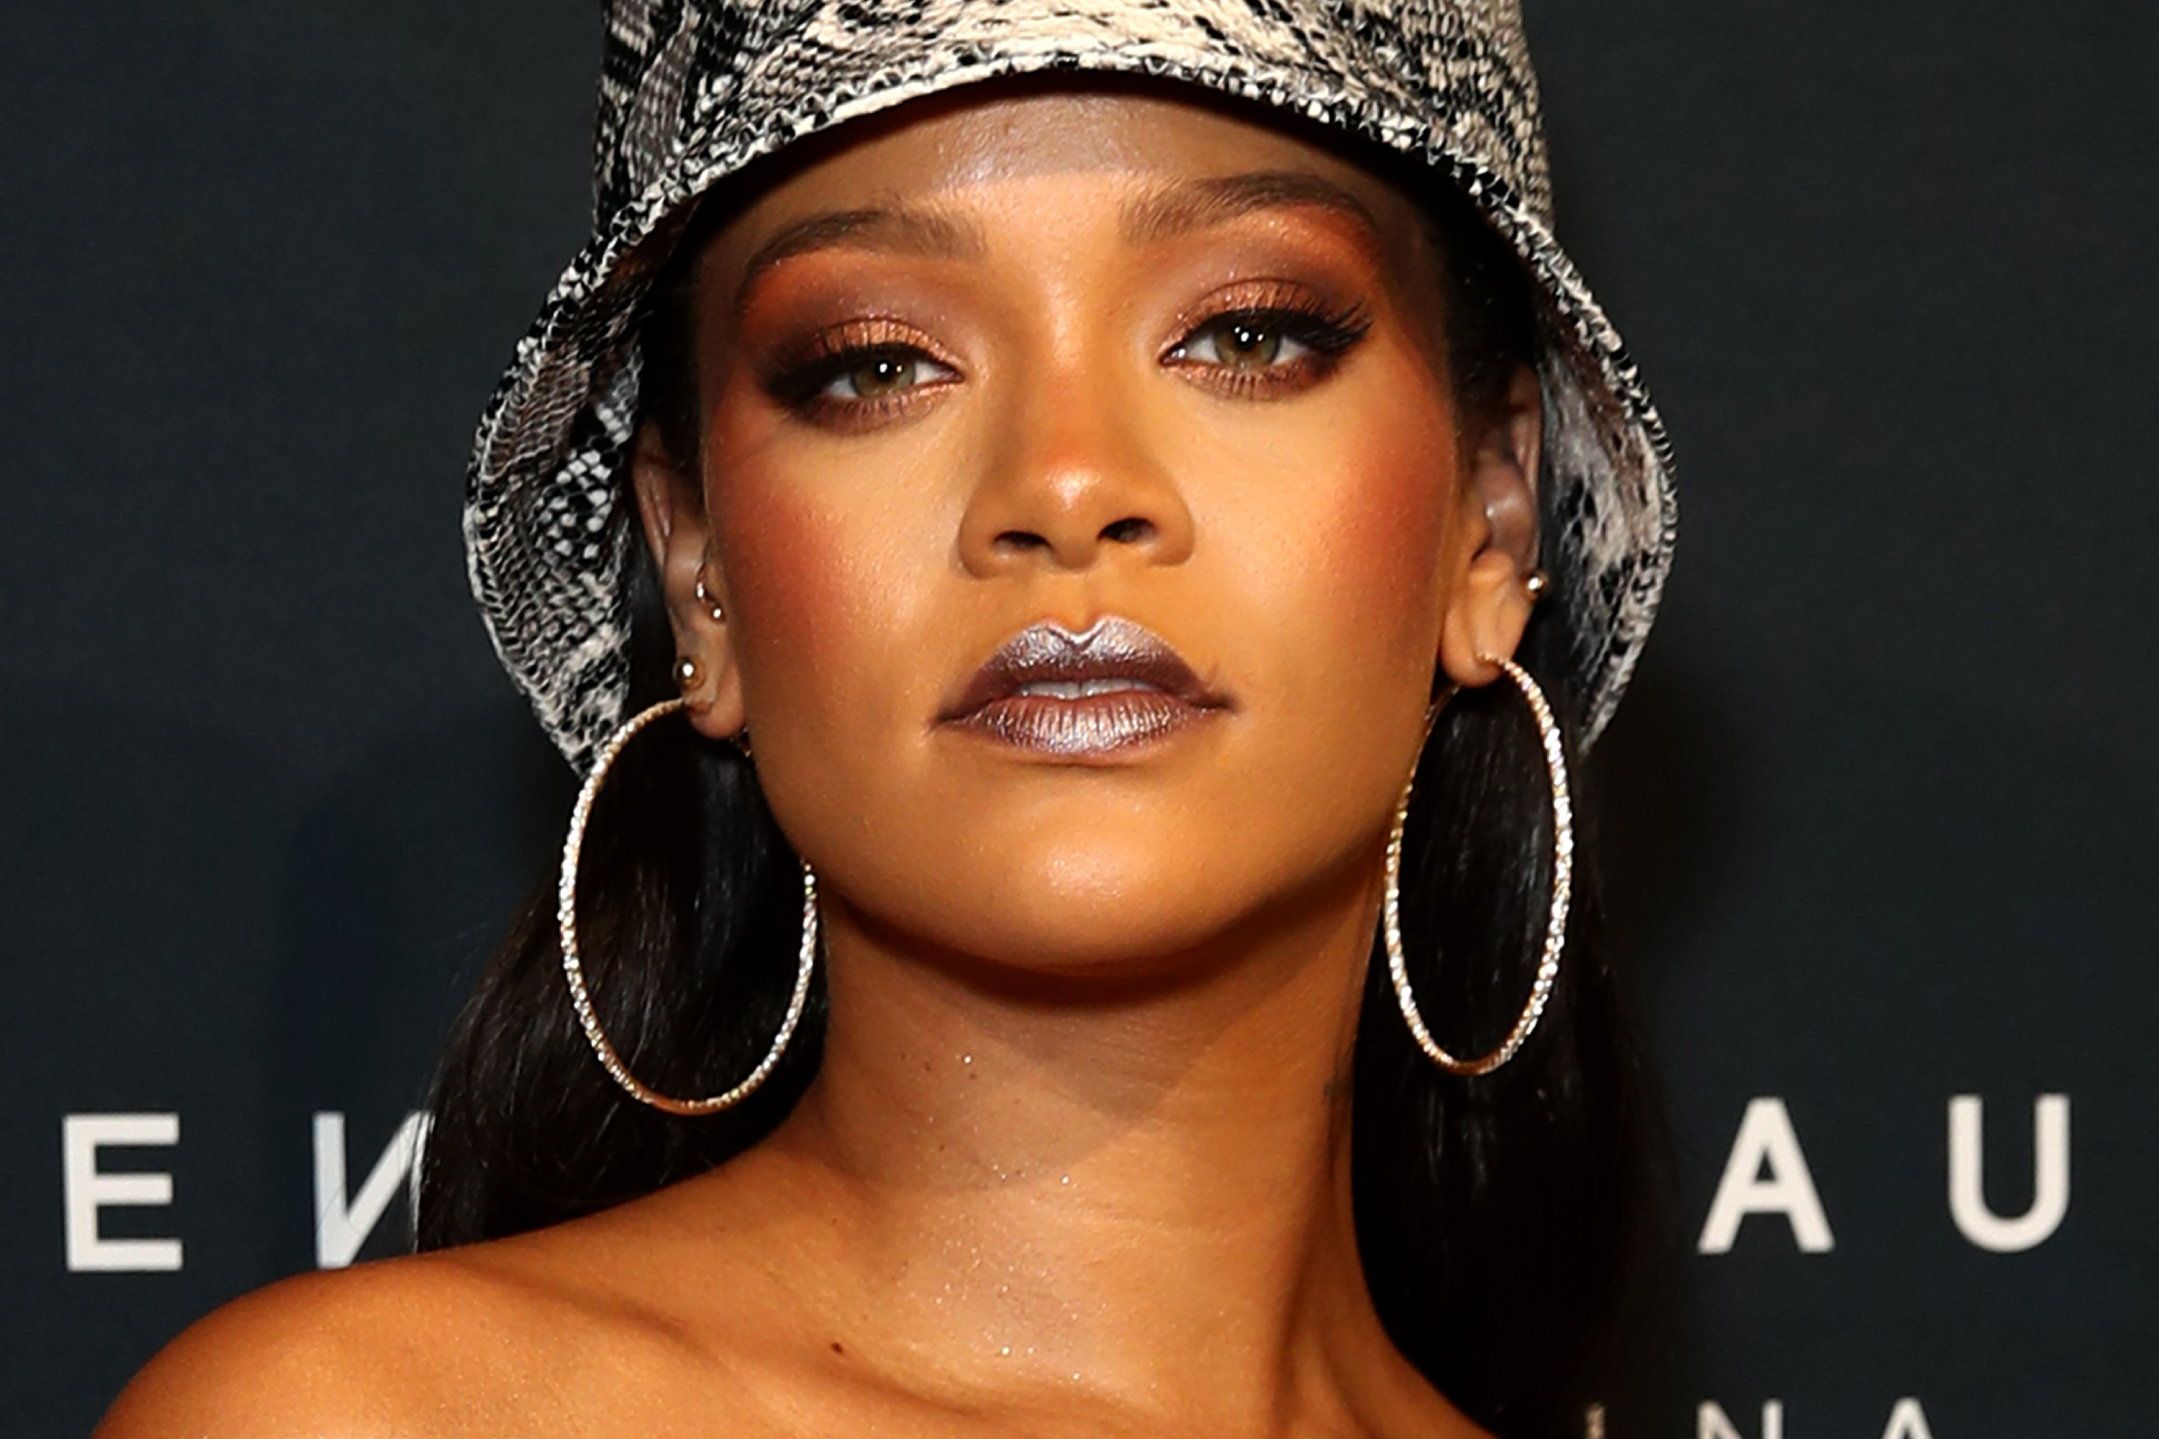 Rihanna now world's richest female musician, thanks to Fenty Beauty